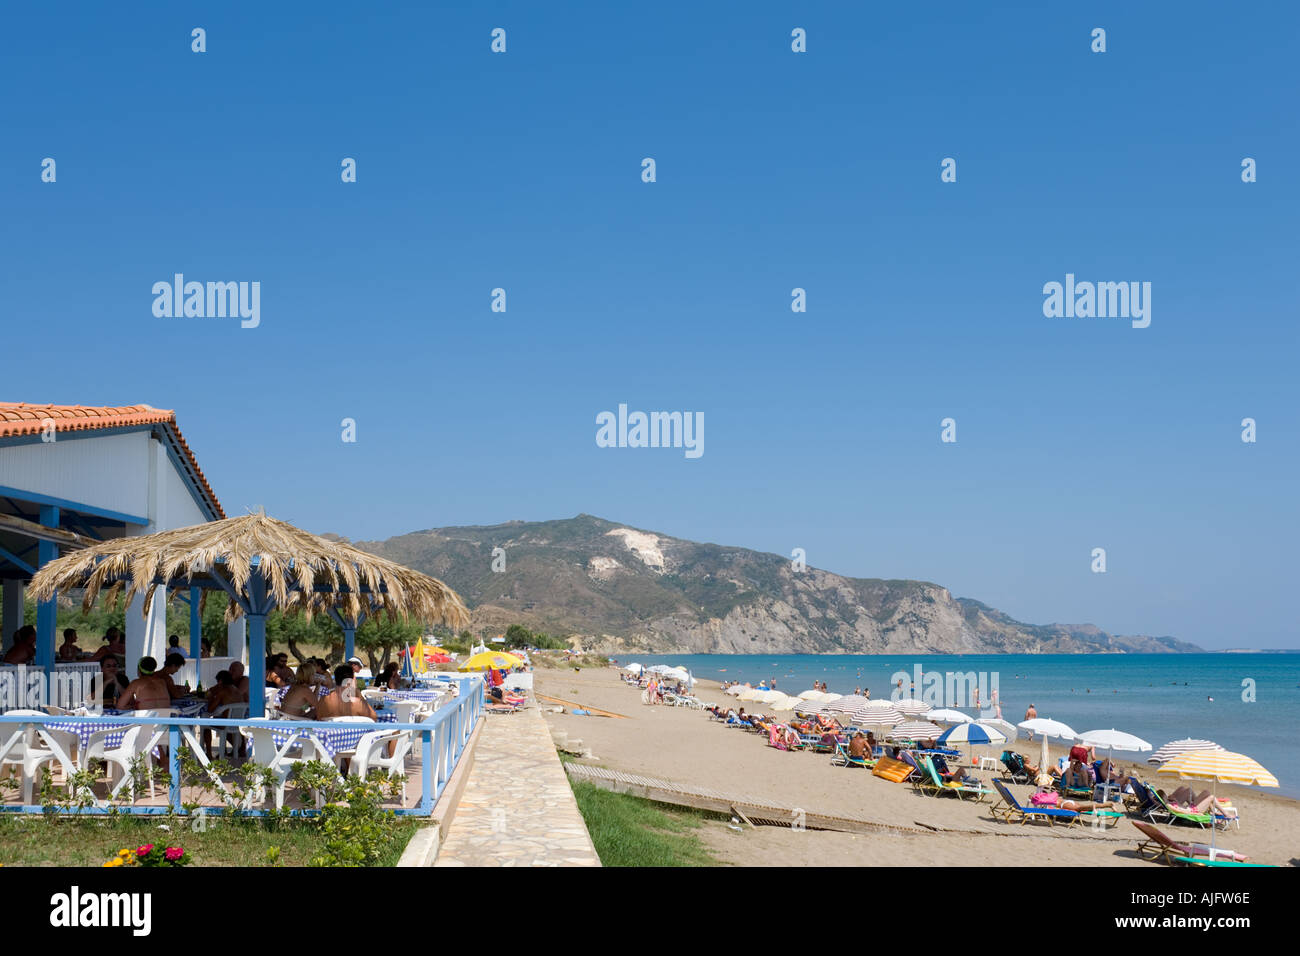 Am Strand Taverne, Kalamaki, Zakynthos (Zante), Ionische Inseln, Griechenland Stockfoto